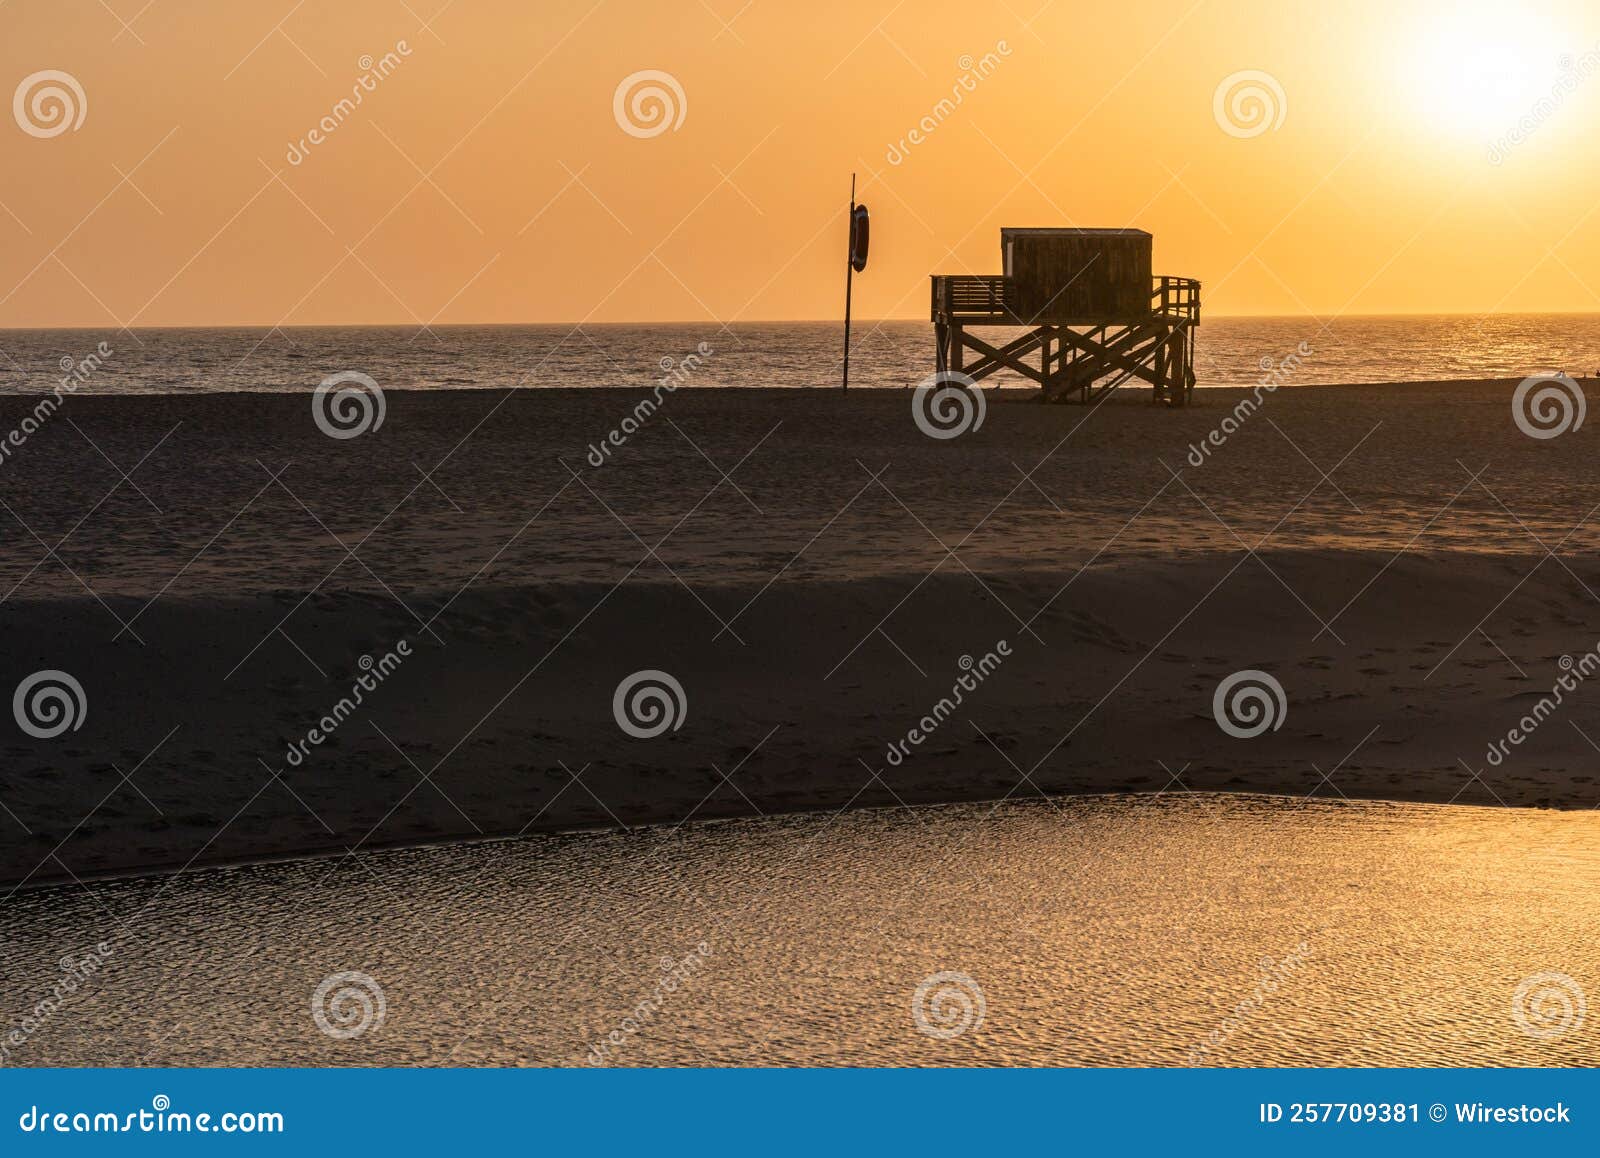 scenic golden sunset at areia branca beach in lourinha, portugal